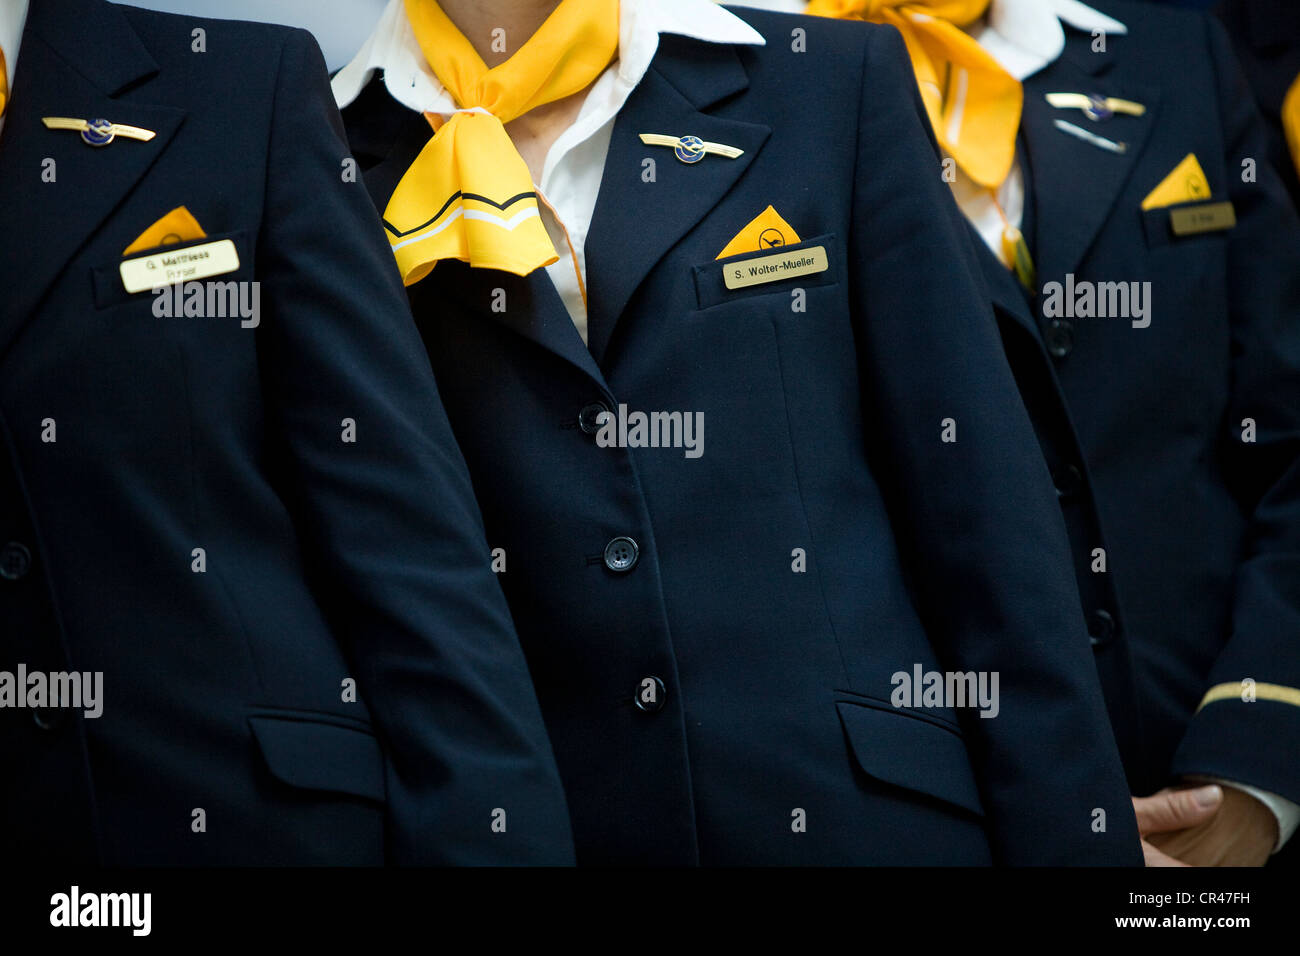 Lufthansa Airlines Flight Attendants.  Stock Photo